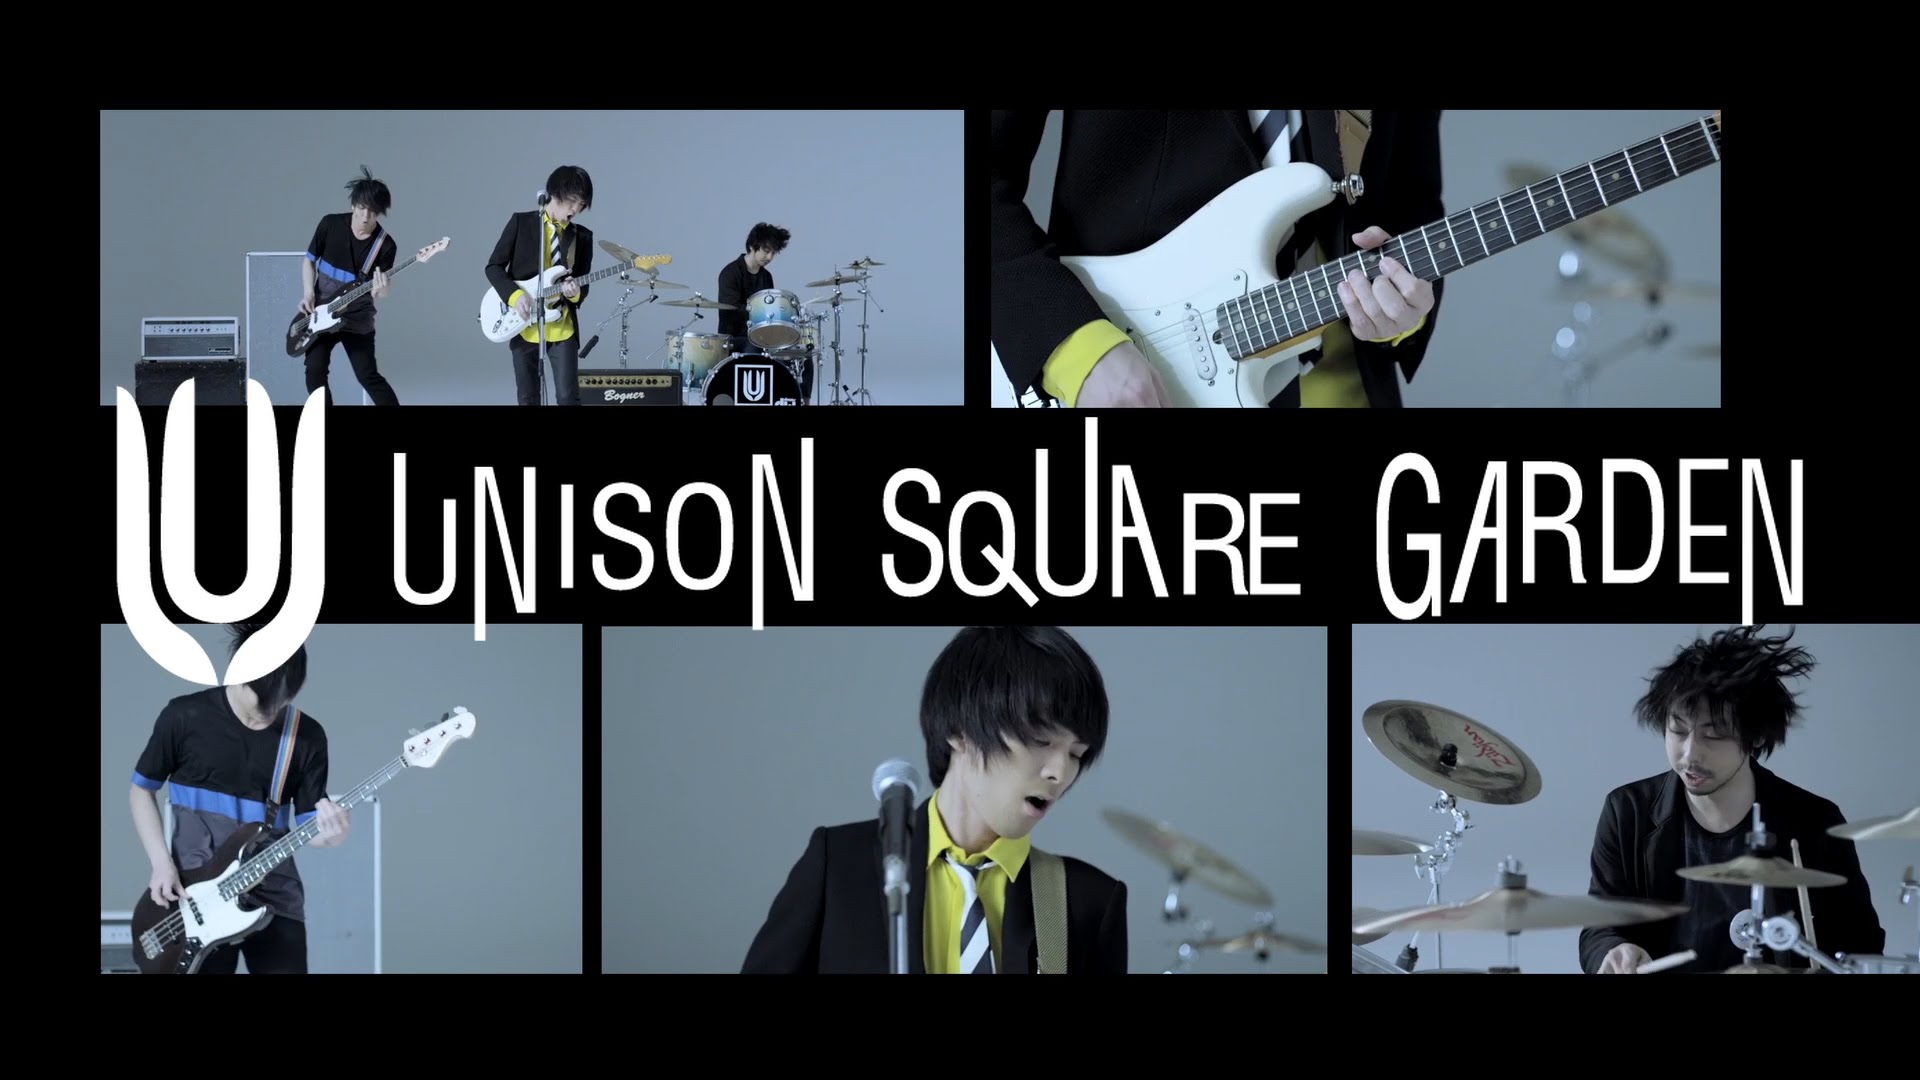 Unison Square Gardenの宣伝画面